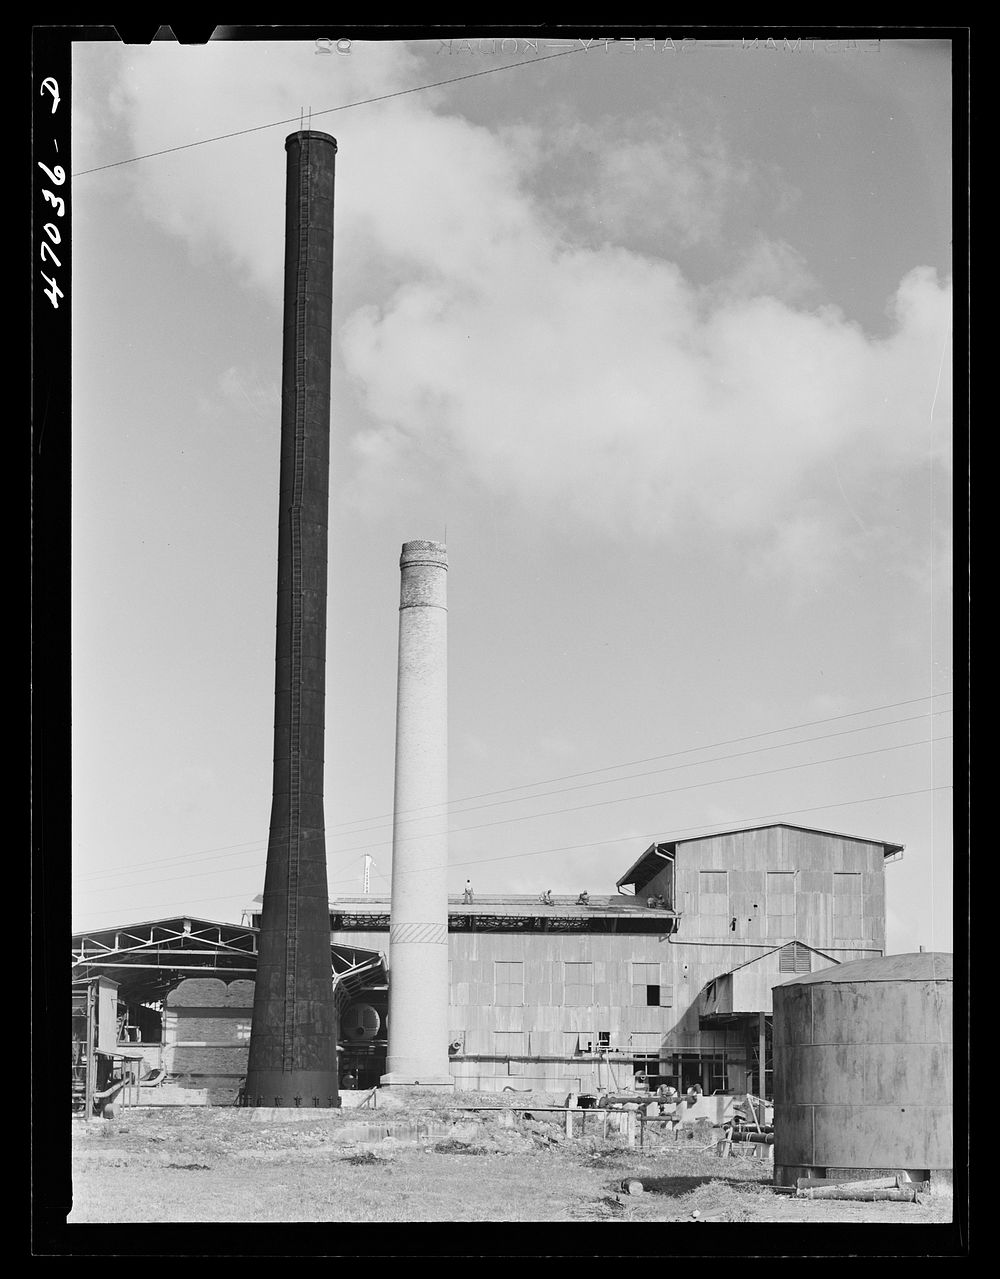 Bethlehem, Saint Croix Island, Virgin Islands. The Bethlehem sugar mill. Sourced from the Library of Congress.